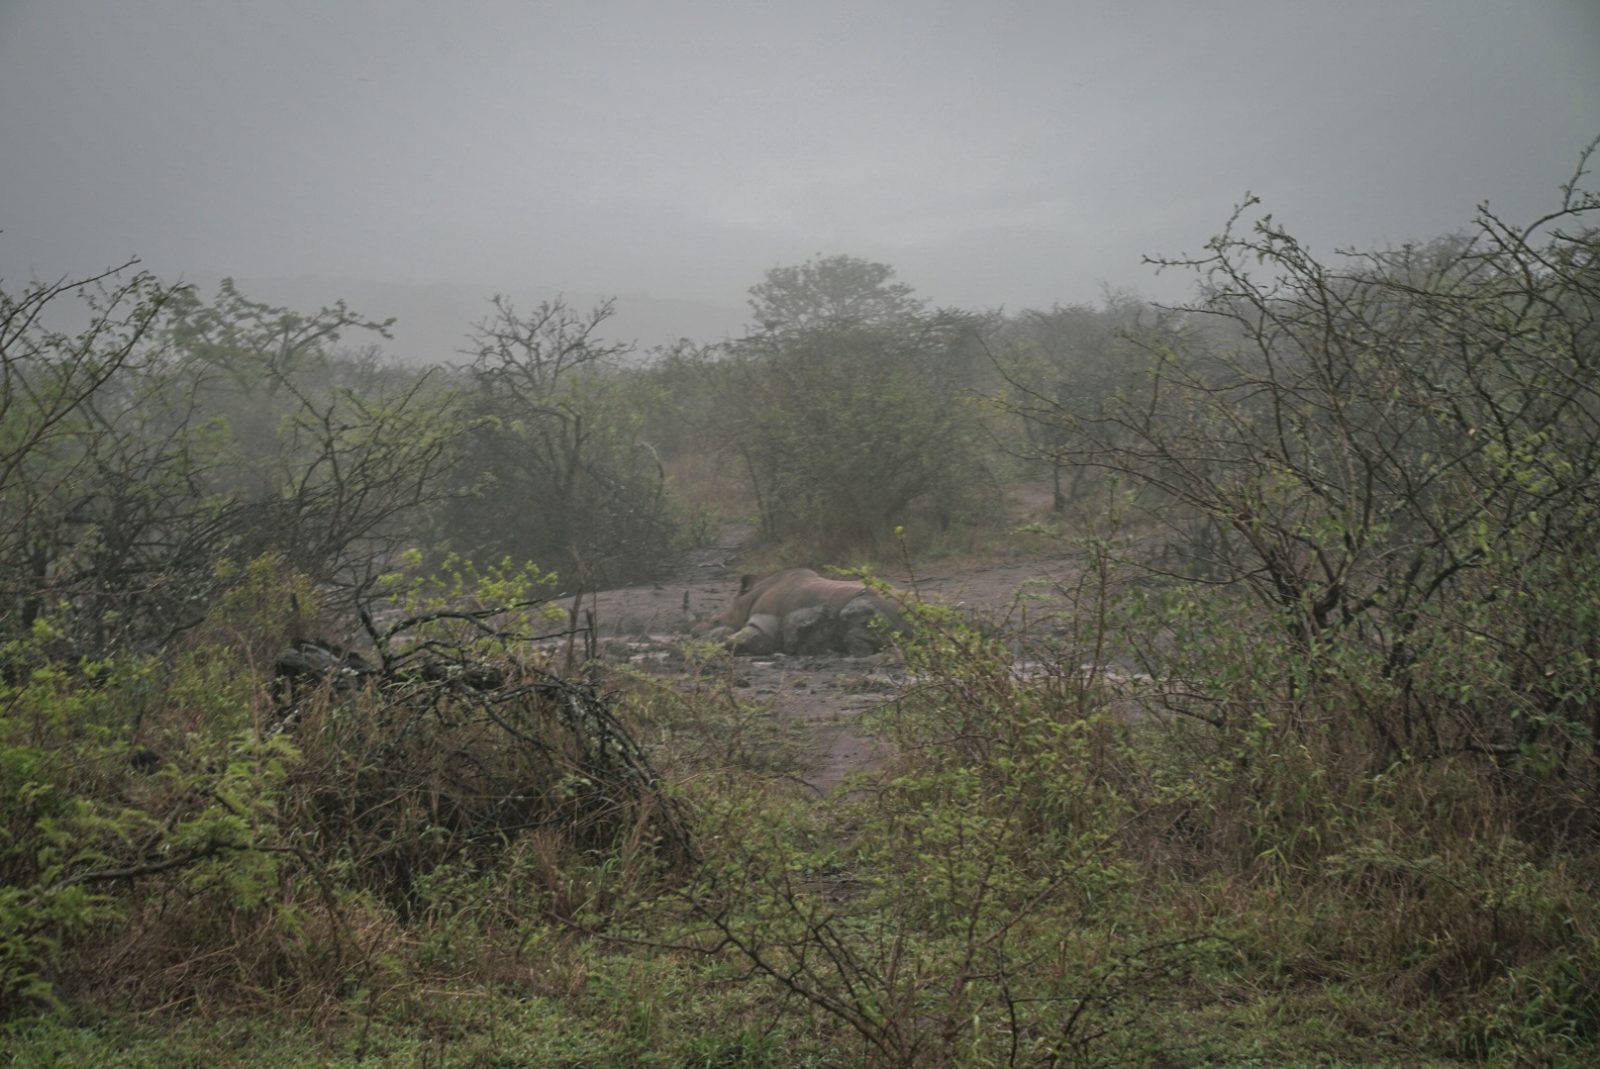 Rhino wollowing in mud at Hluhluwe-IMfolozi Park 